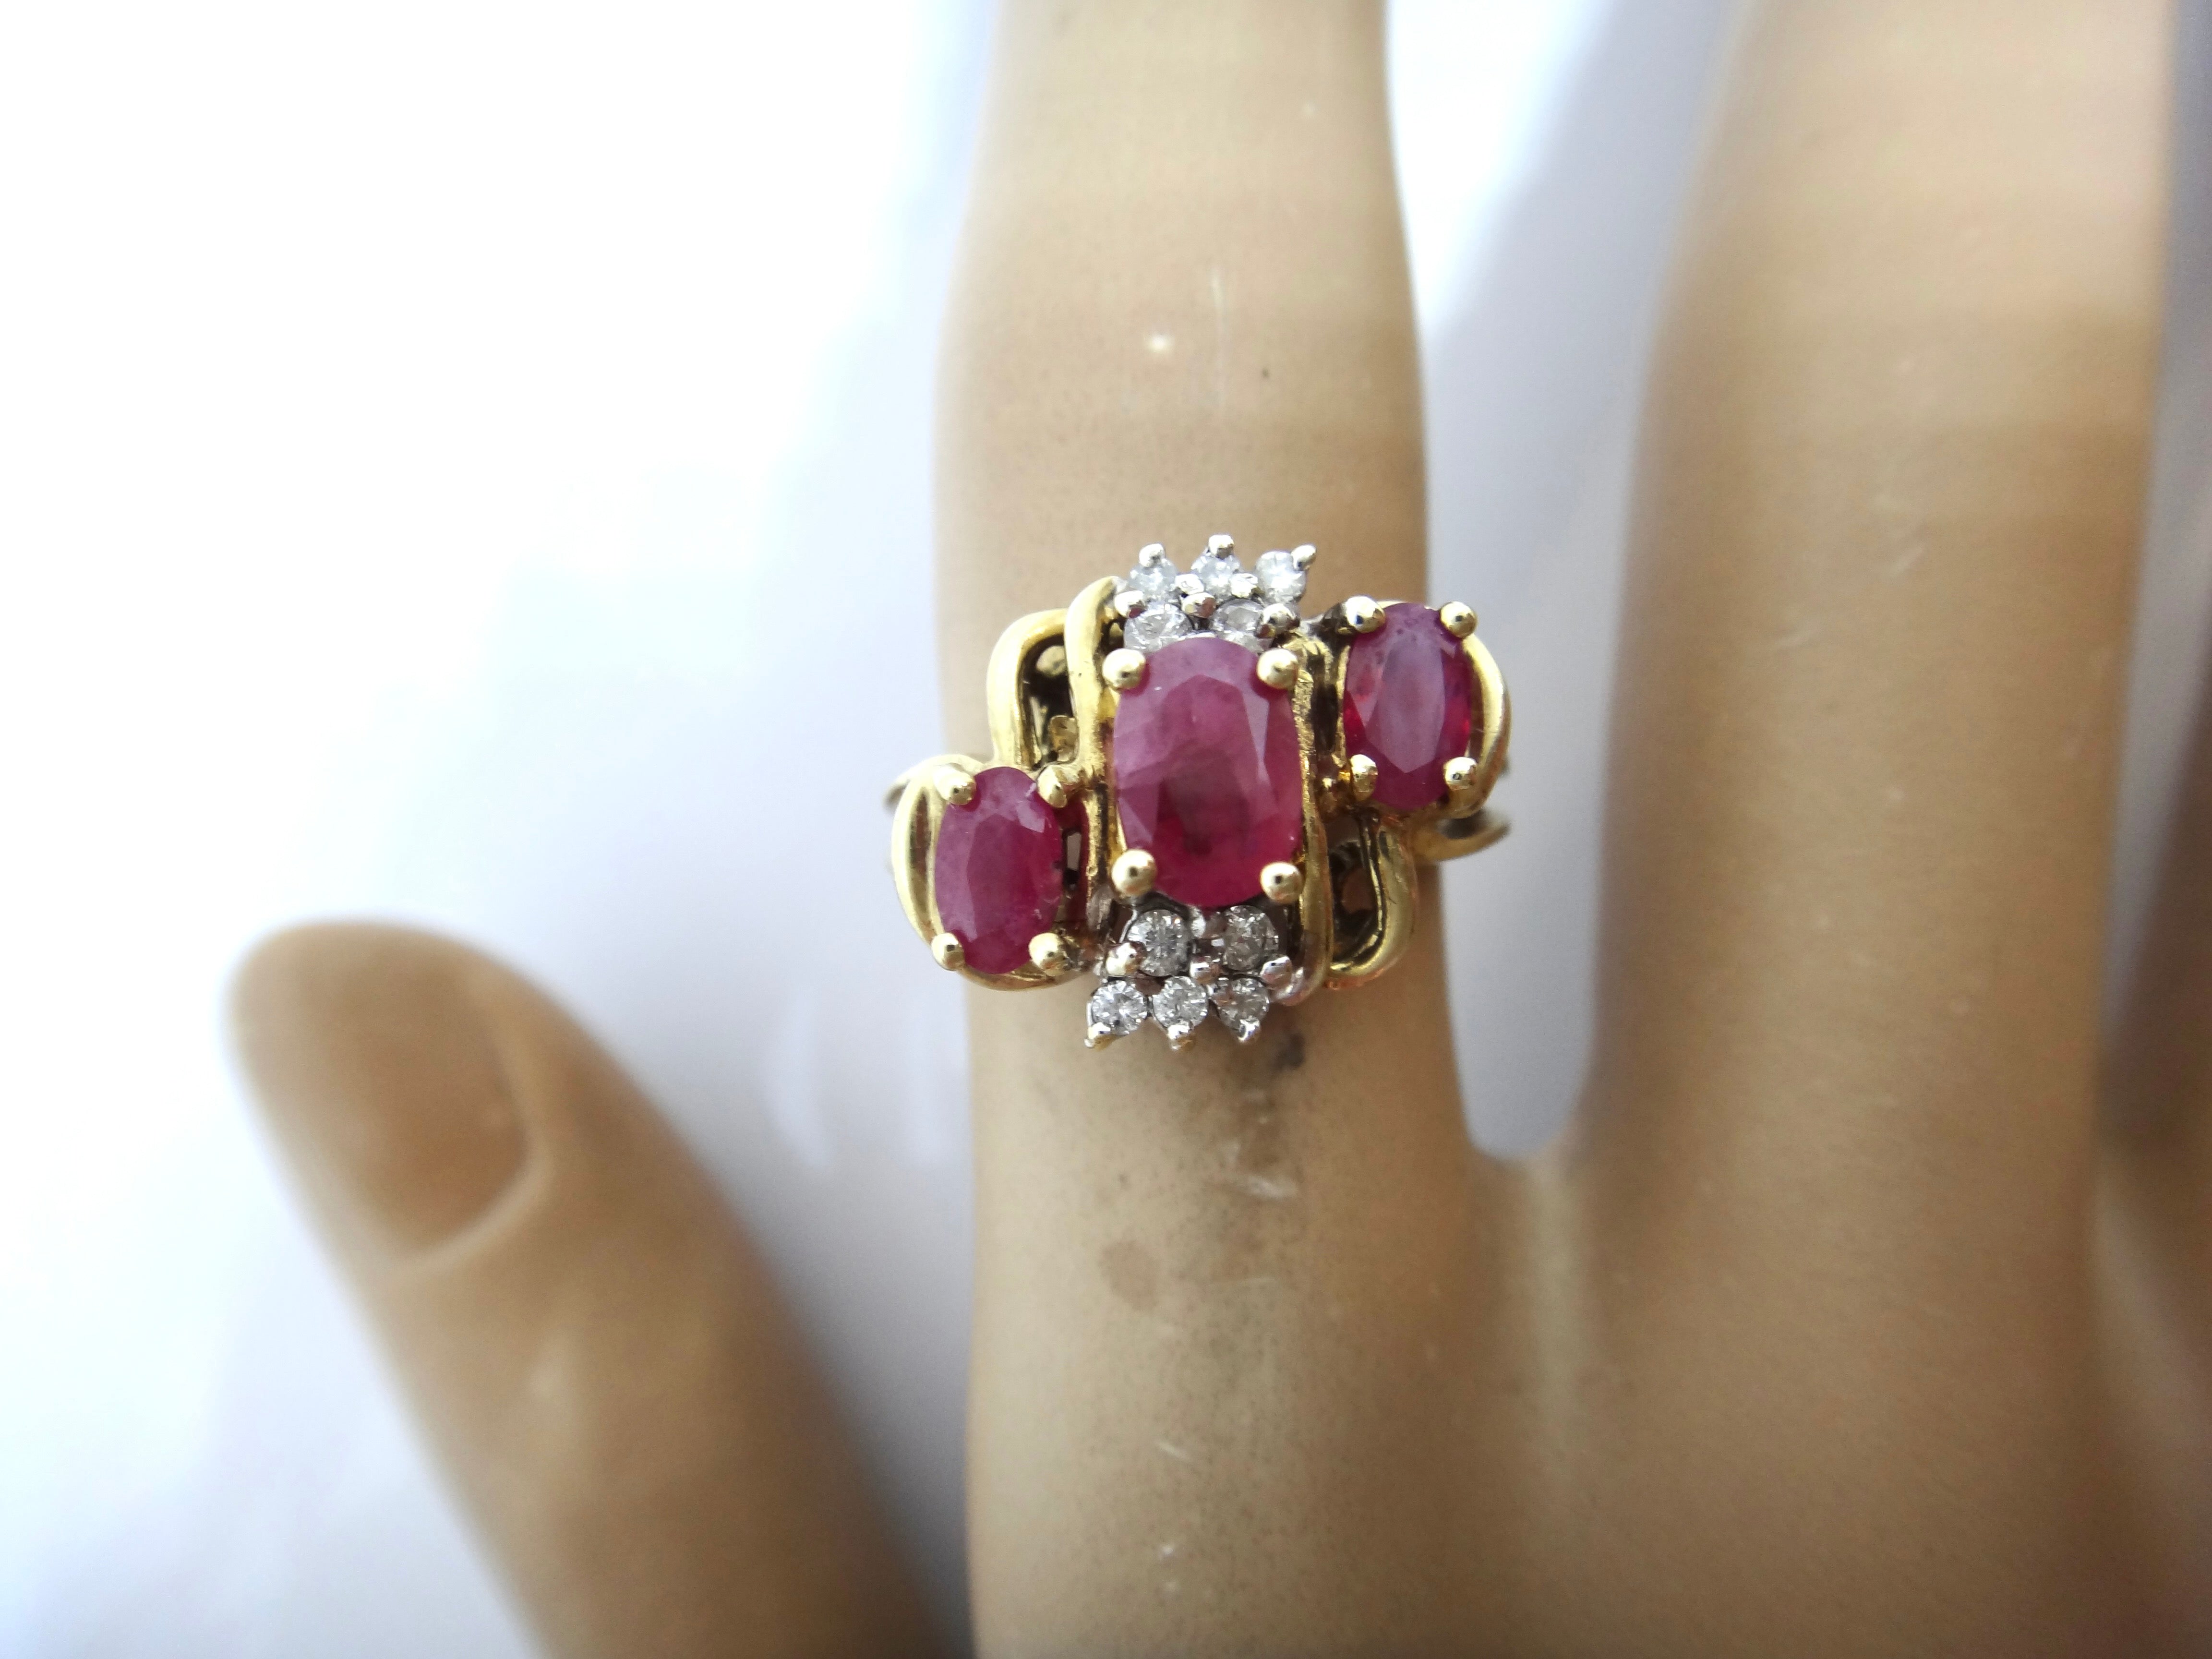 10CT Yellow GOLD, Natural Ruby & Diamond Ring VAL $2,350